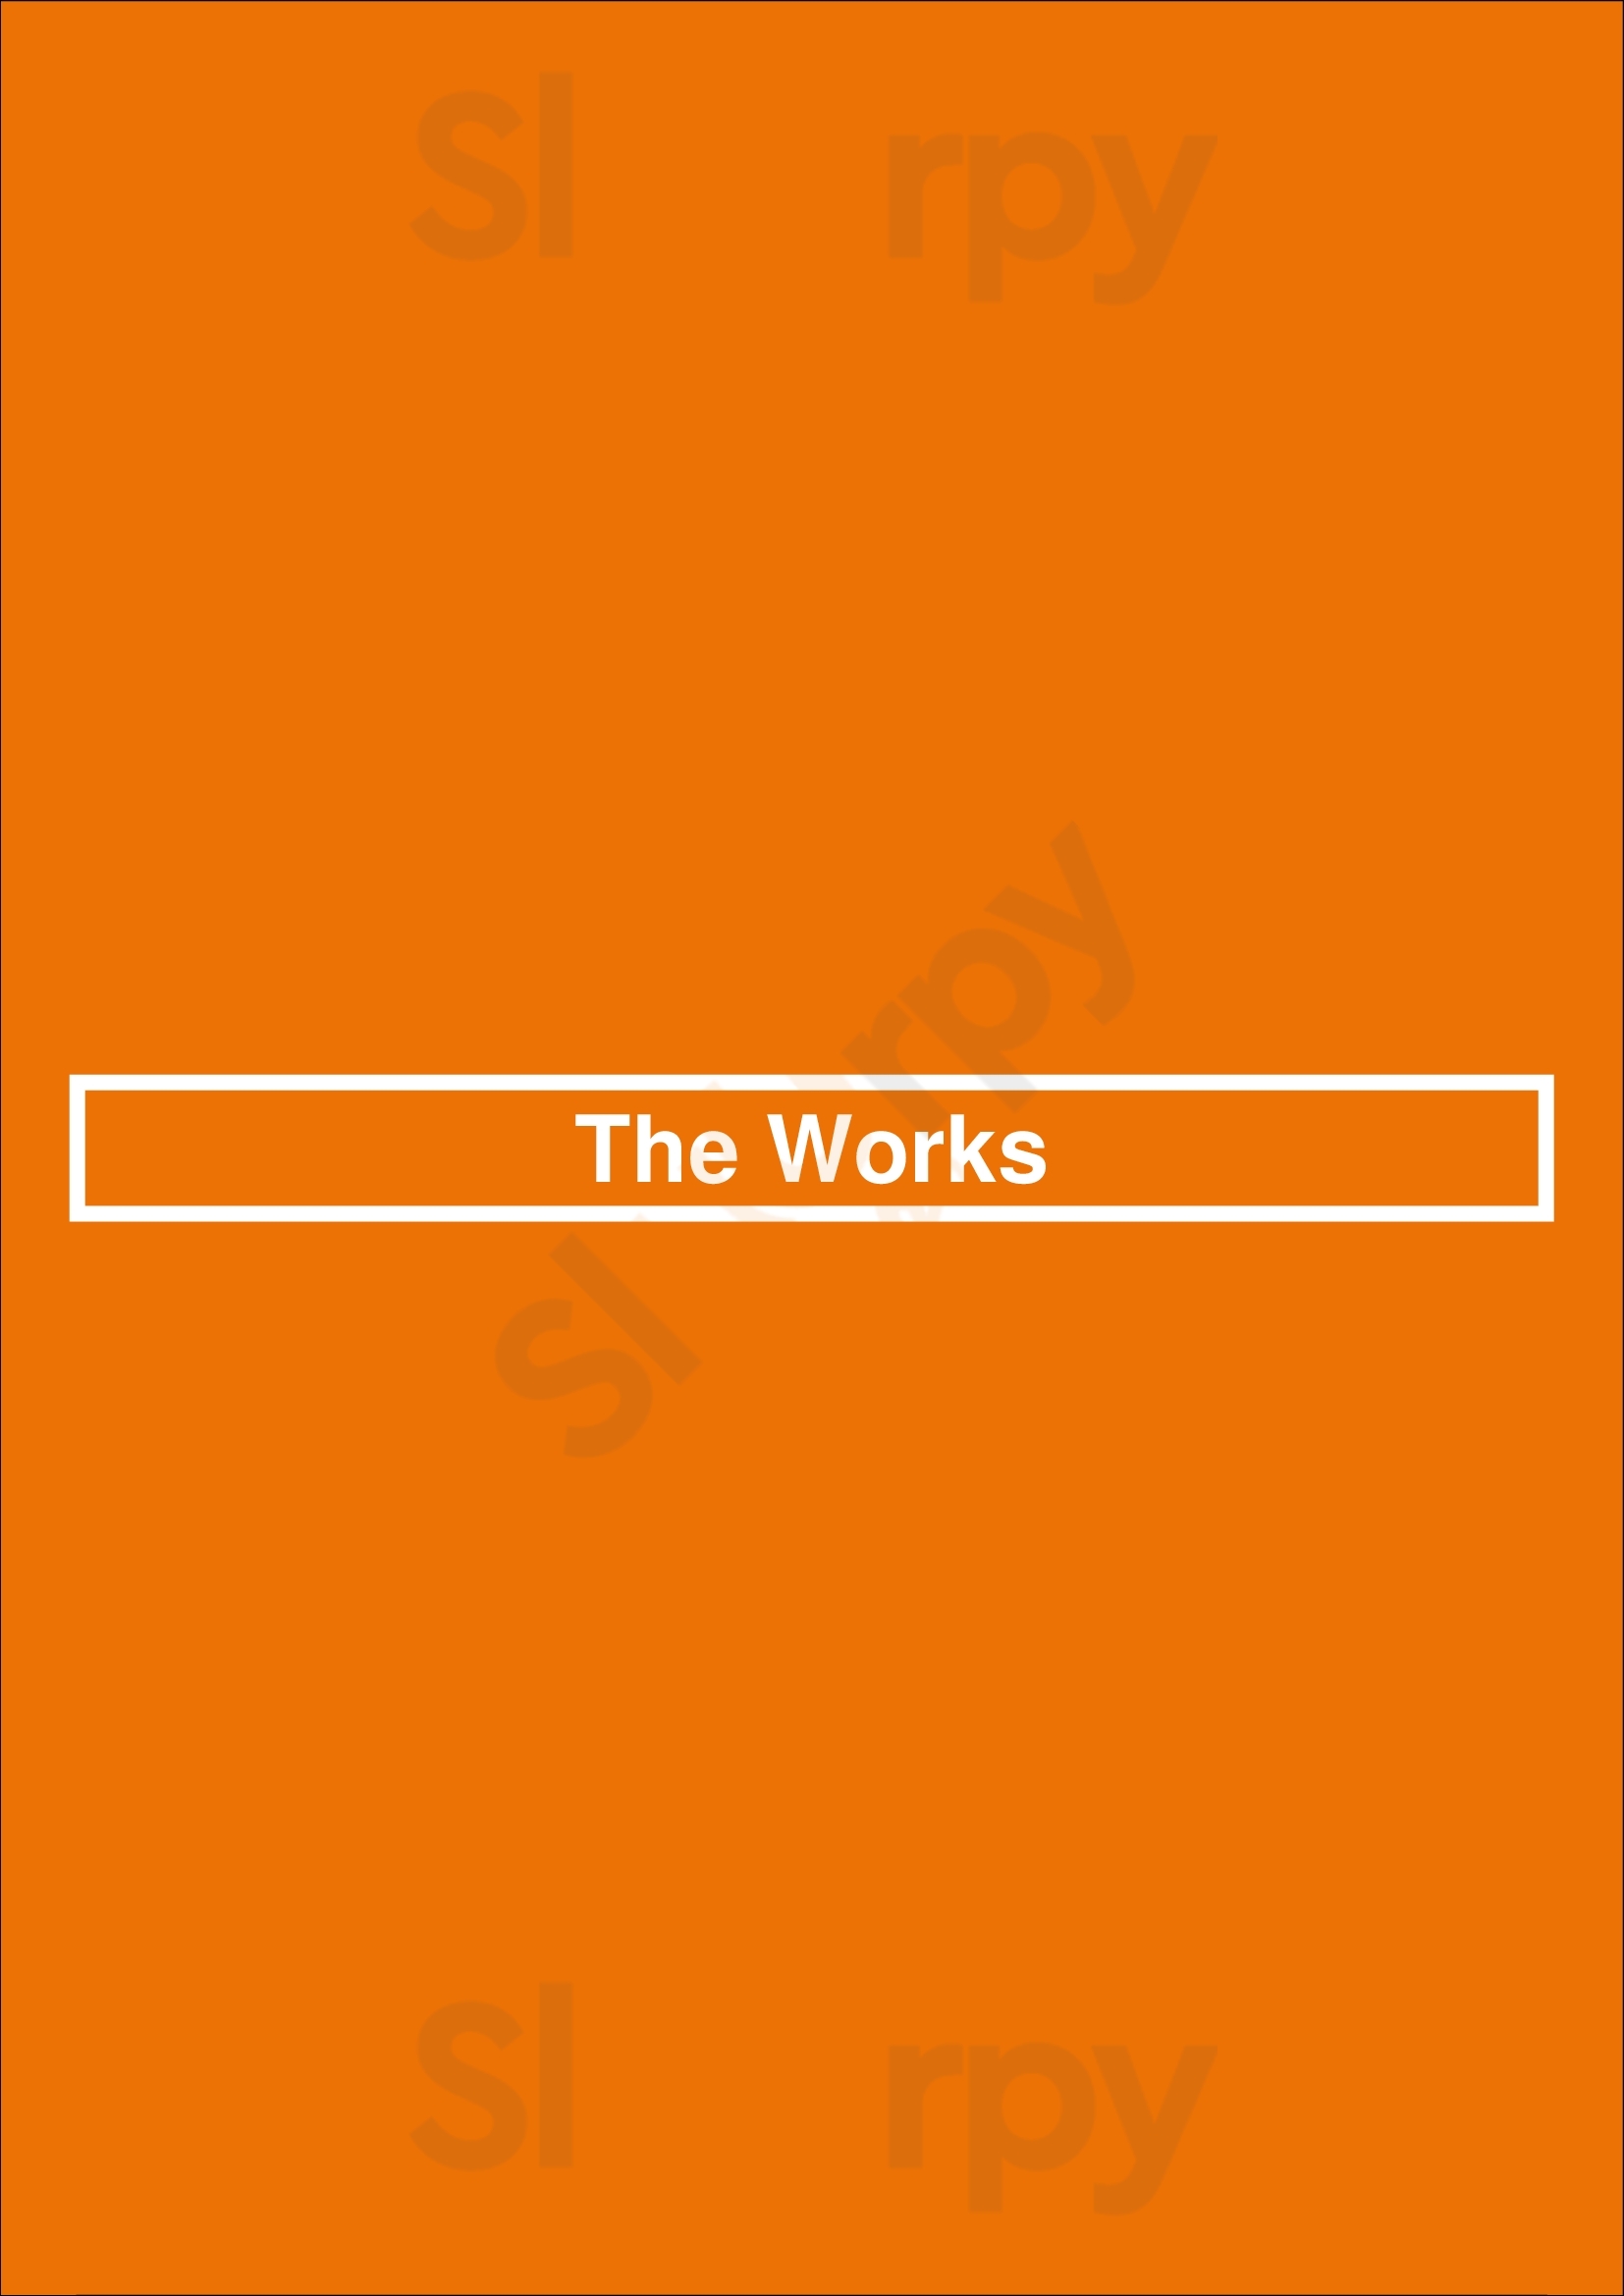 The Works High Wycombe Menu - 1